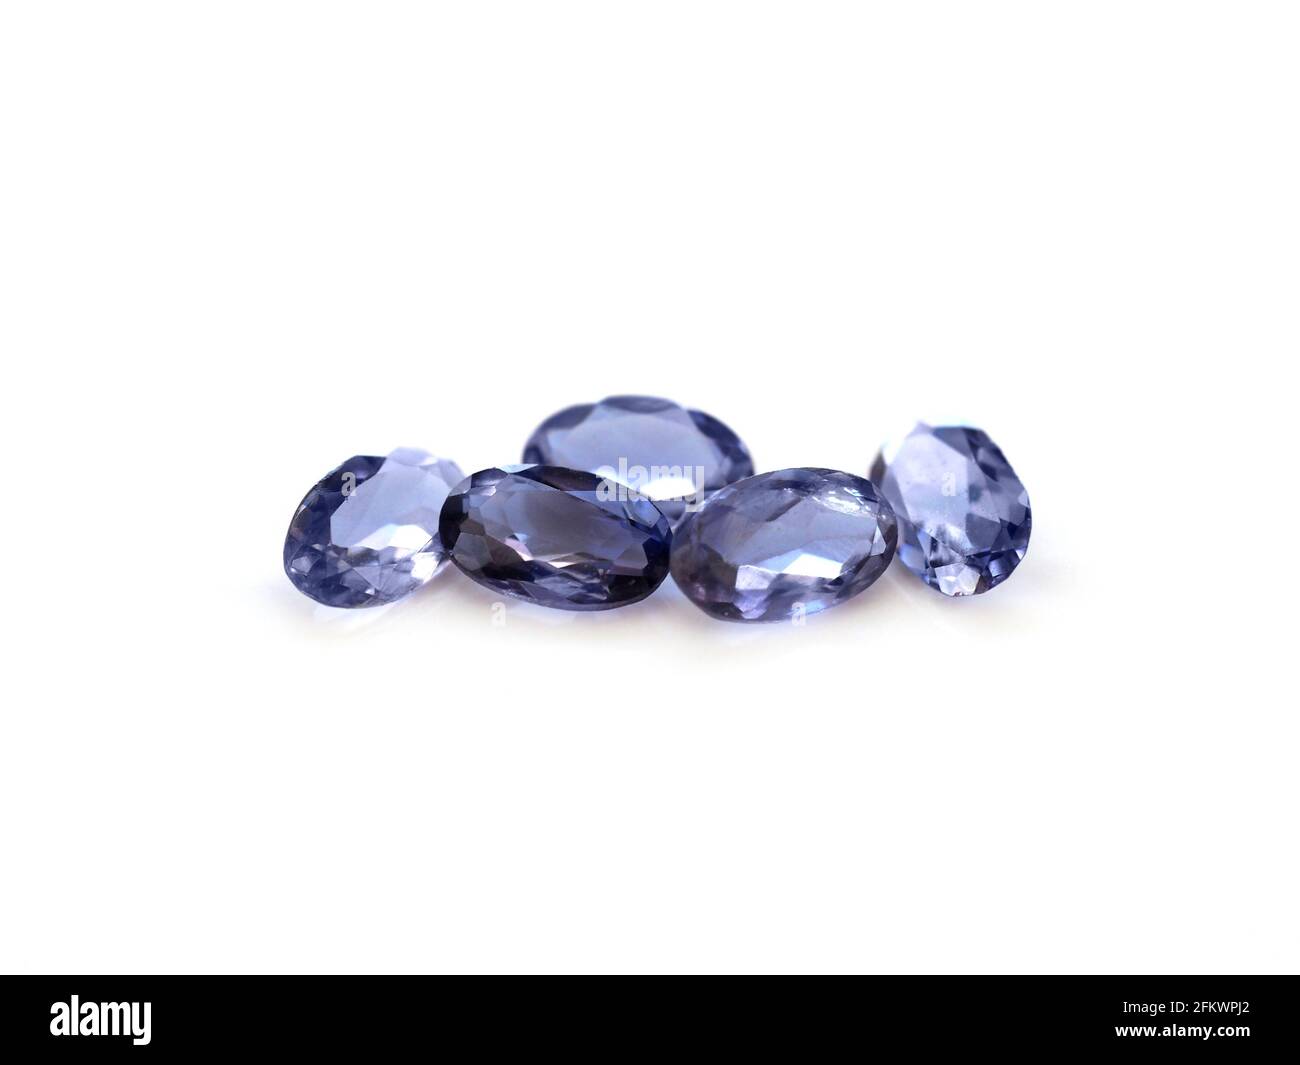 Iolite gemstone oval shaped on a white background Stock Photo